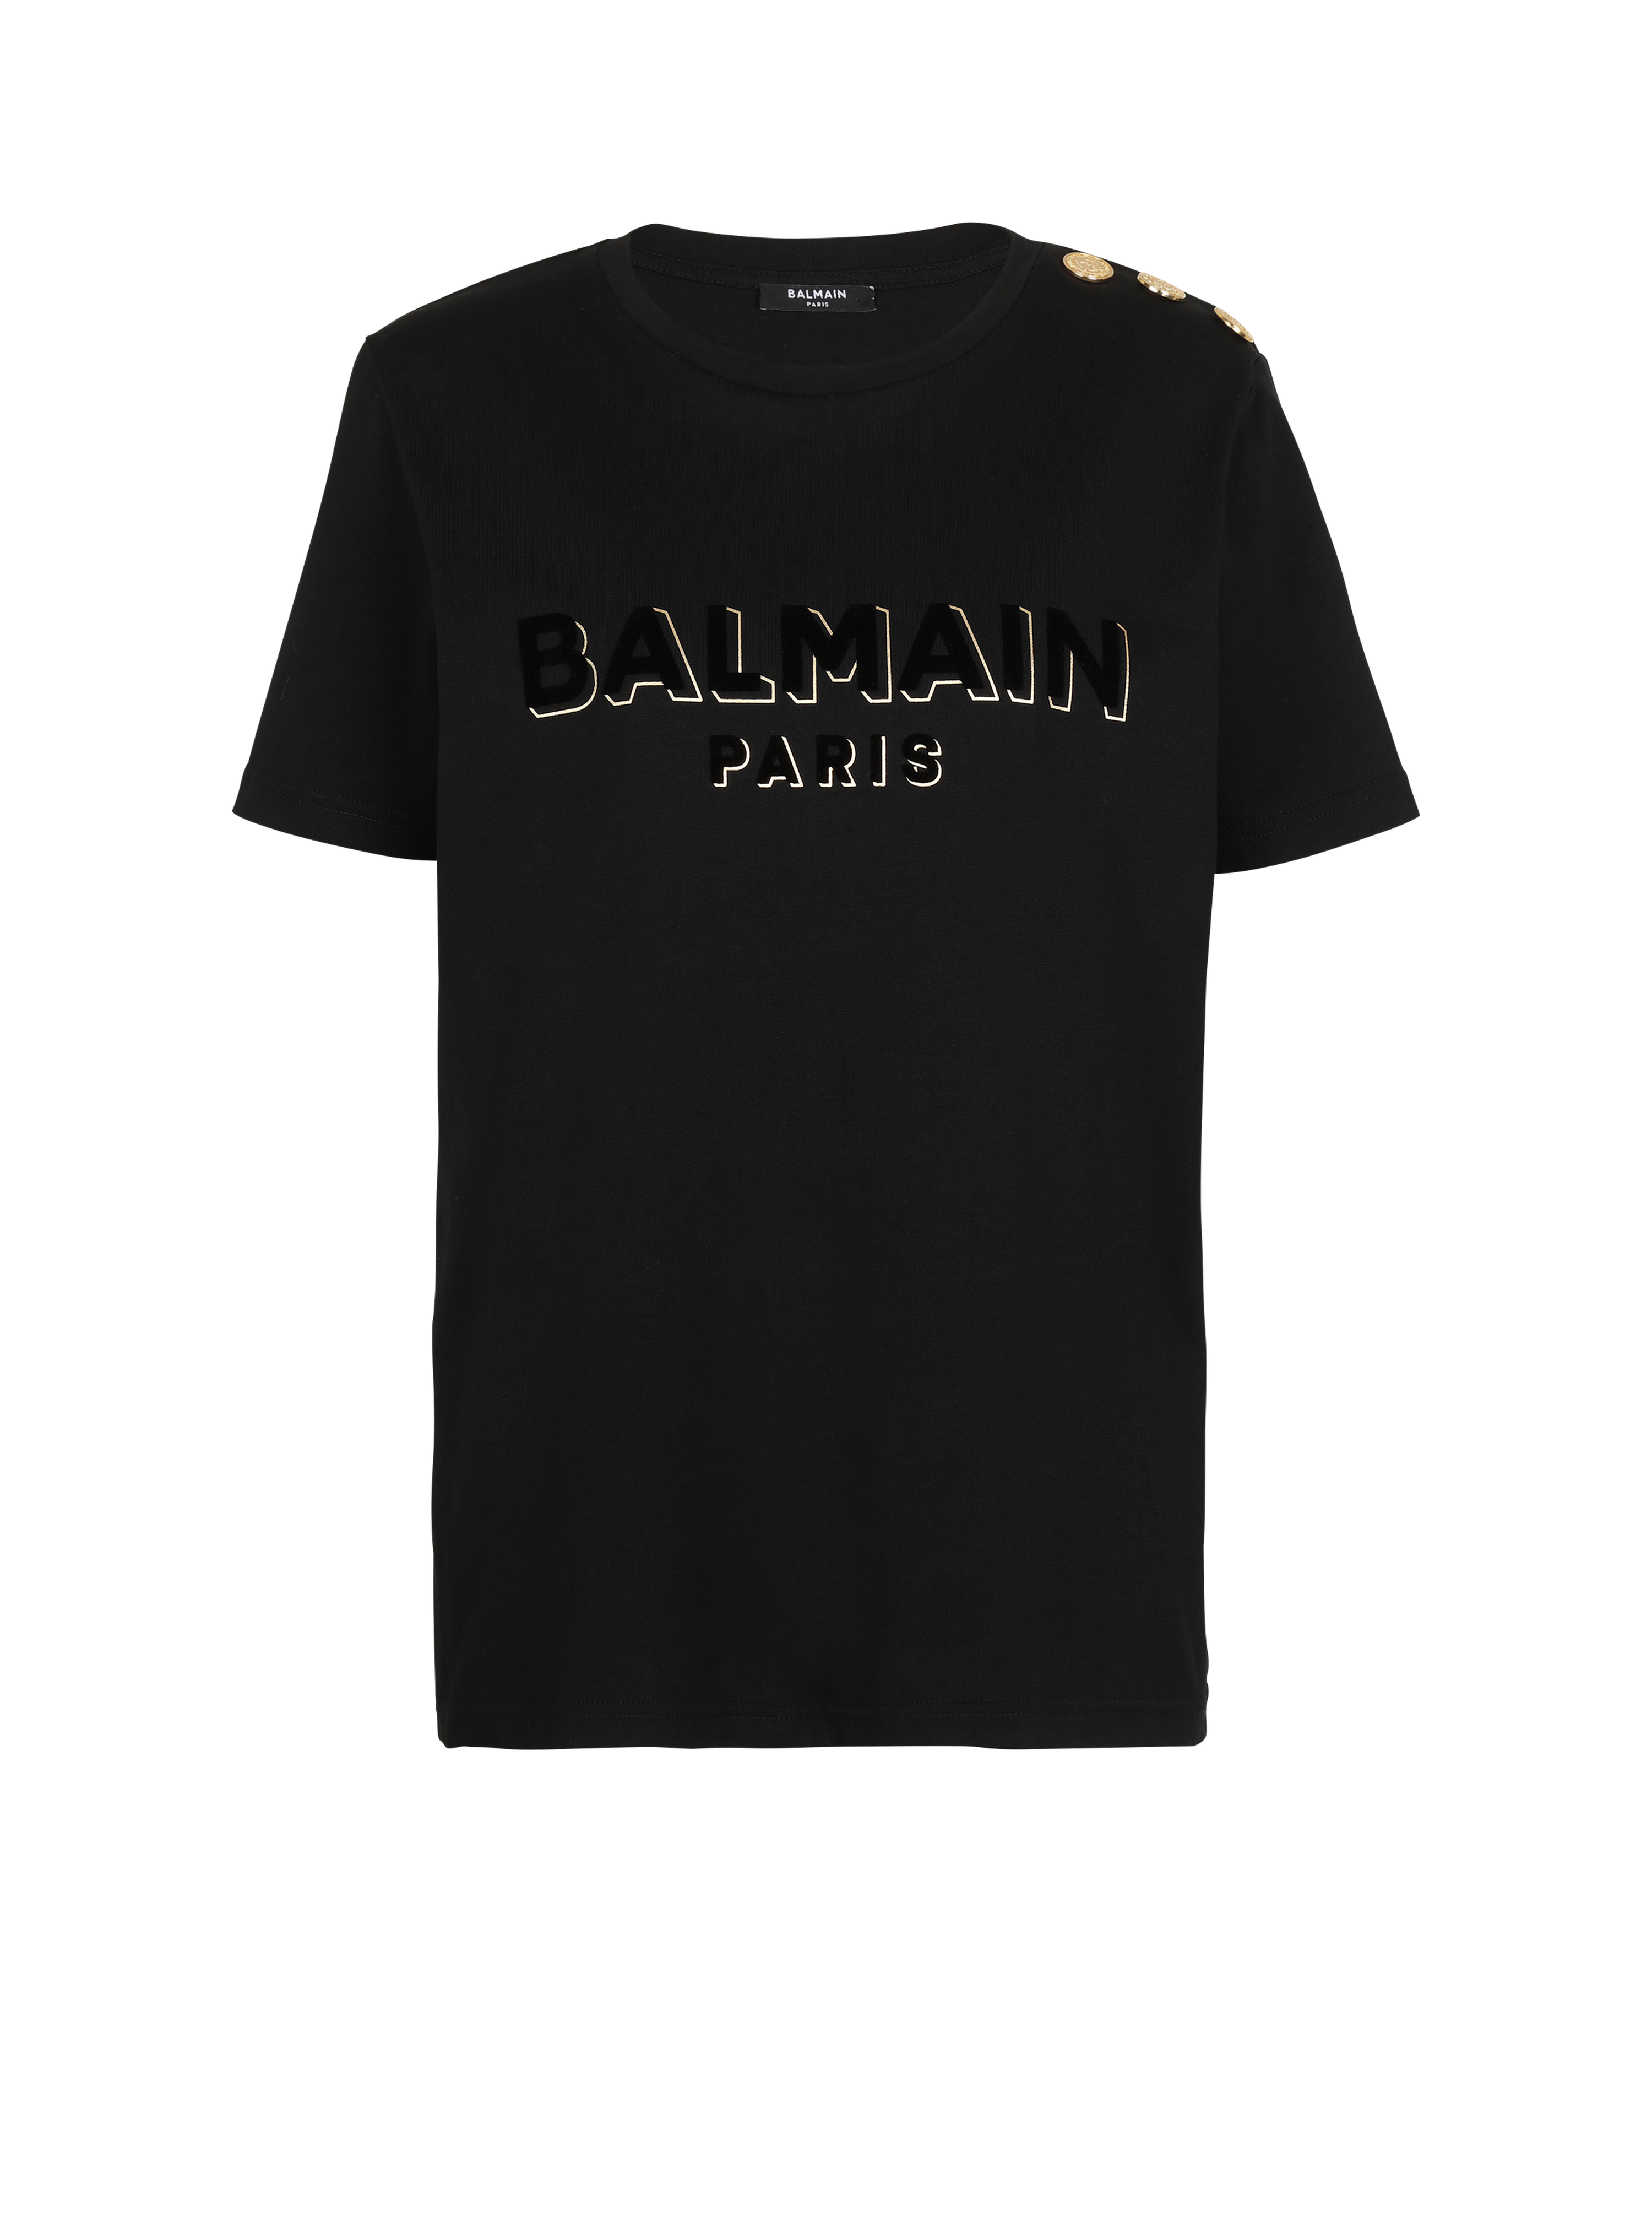 Cotton T-shirt with flocked metallic Balmain logo, black